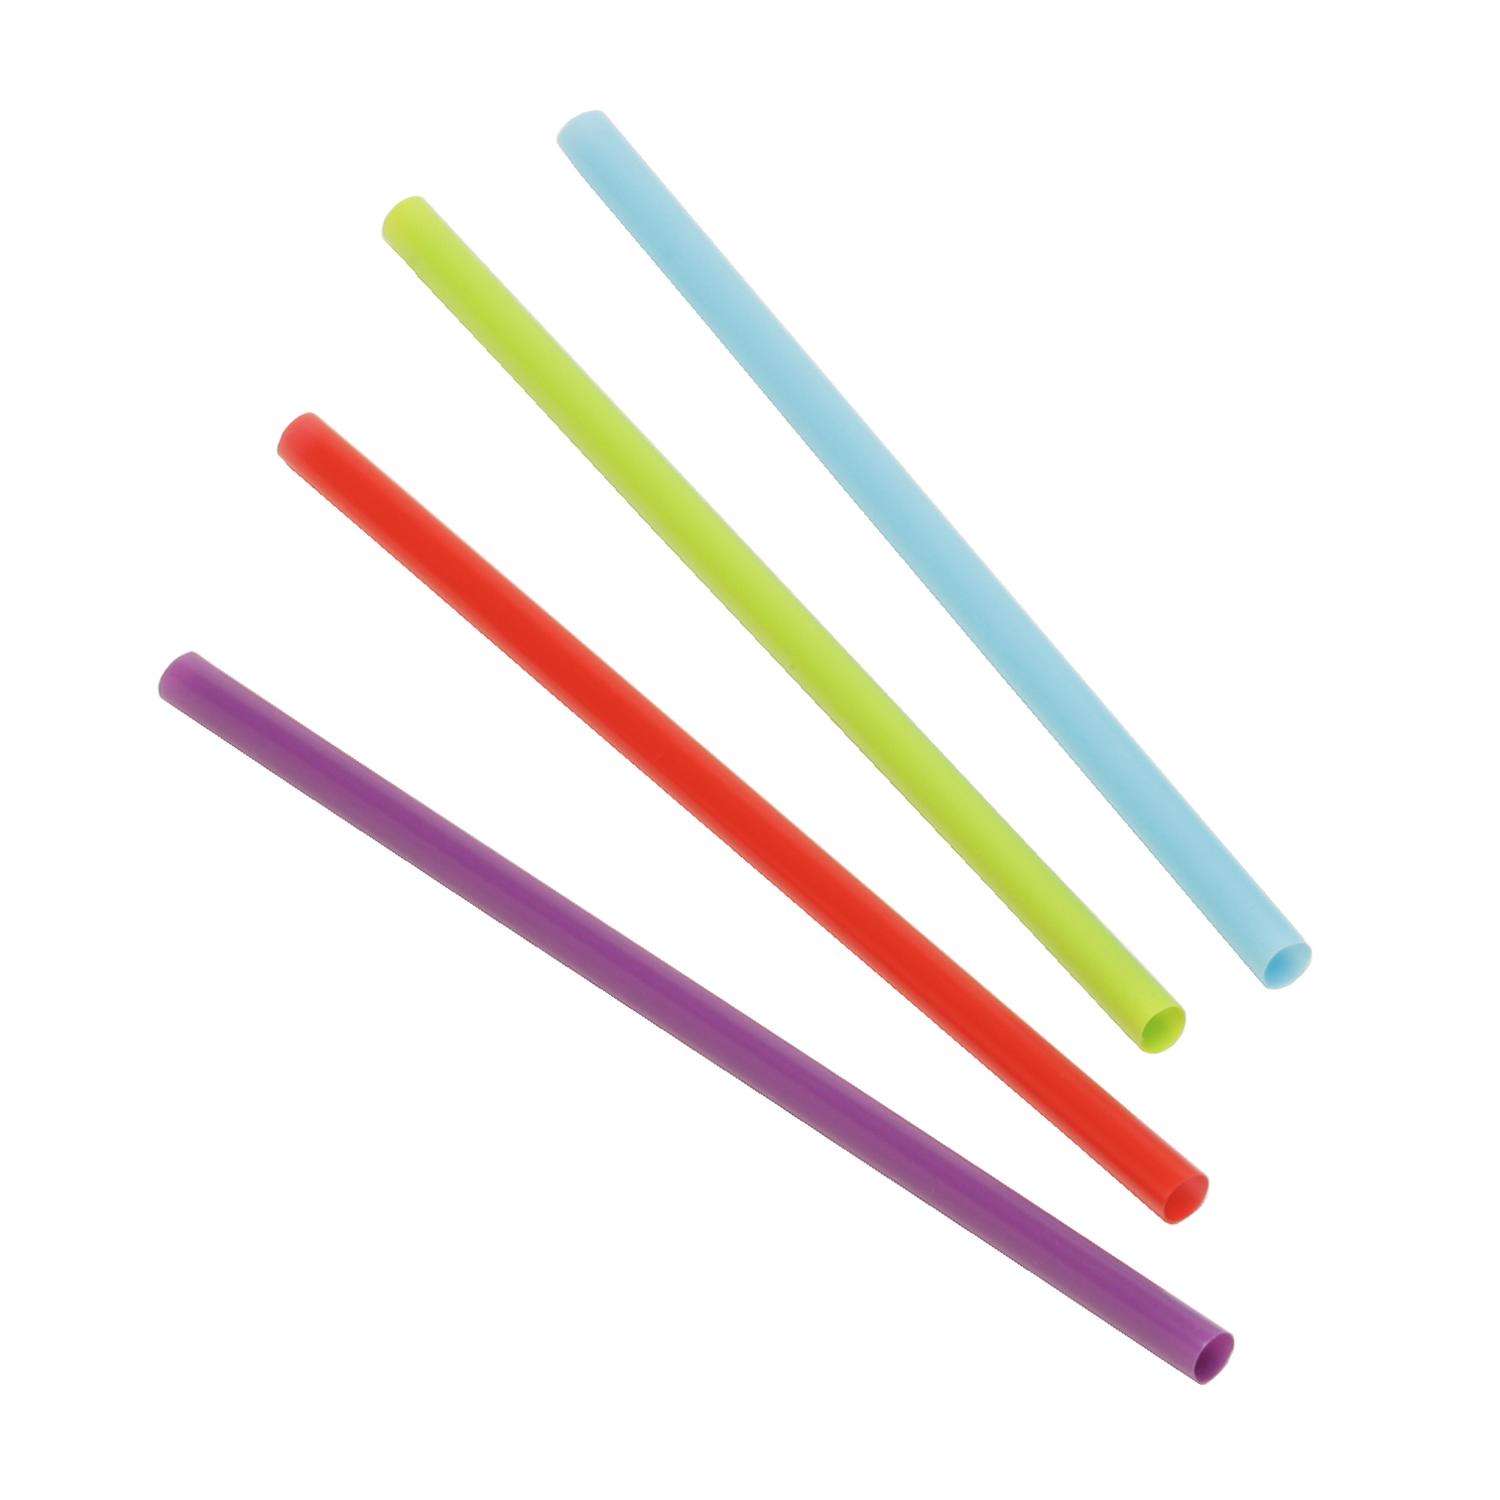 KOLORAE Striped Reusable Plastic Straws - 24 Count